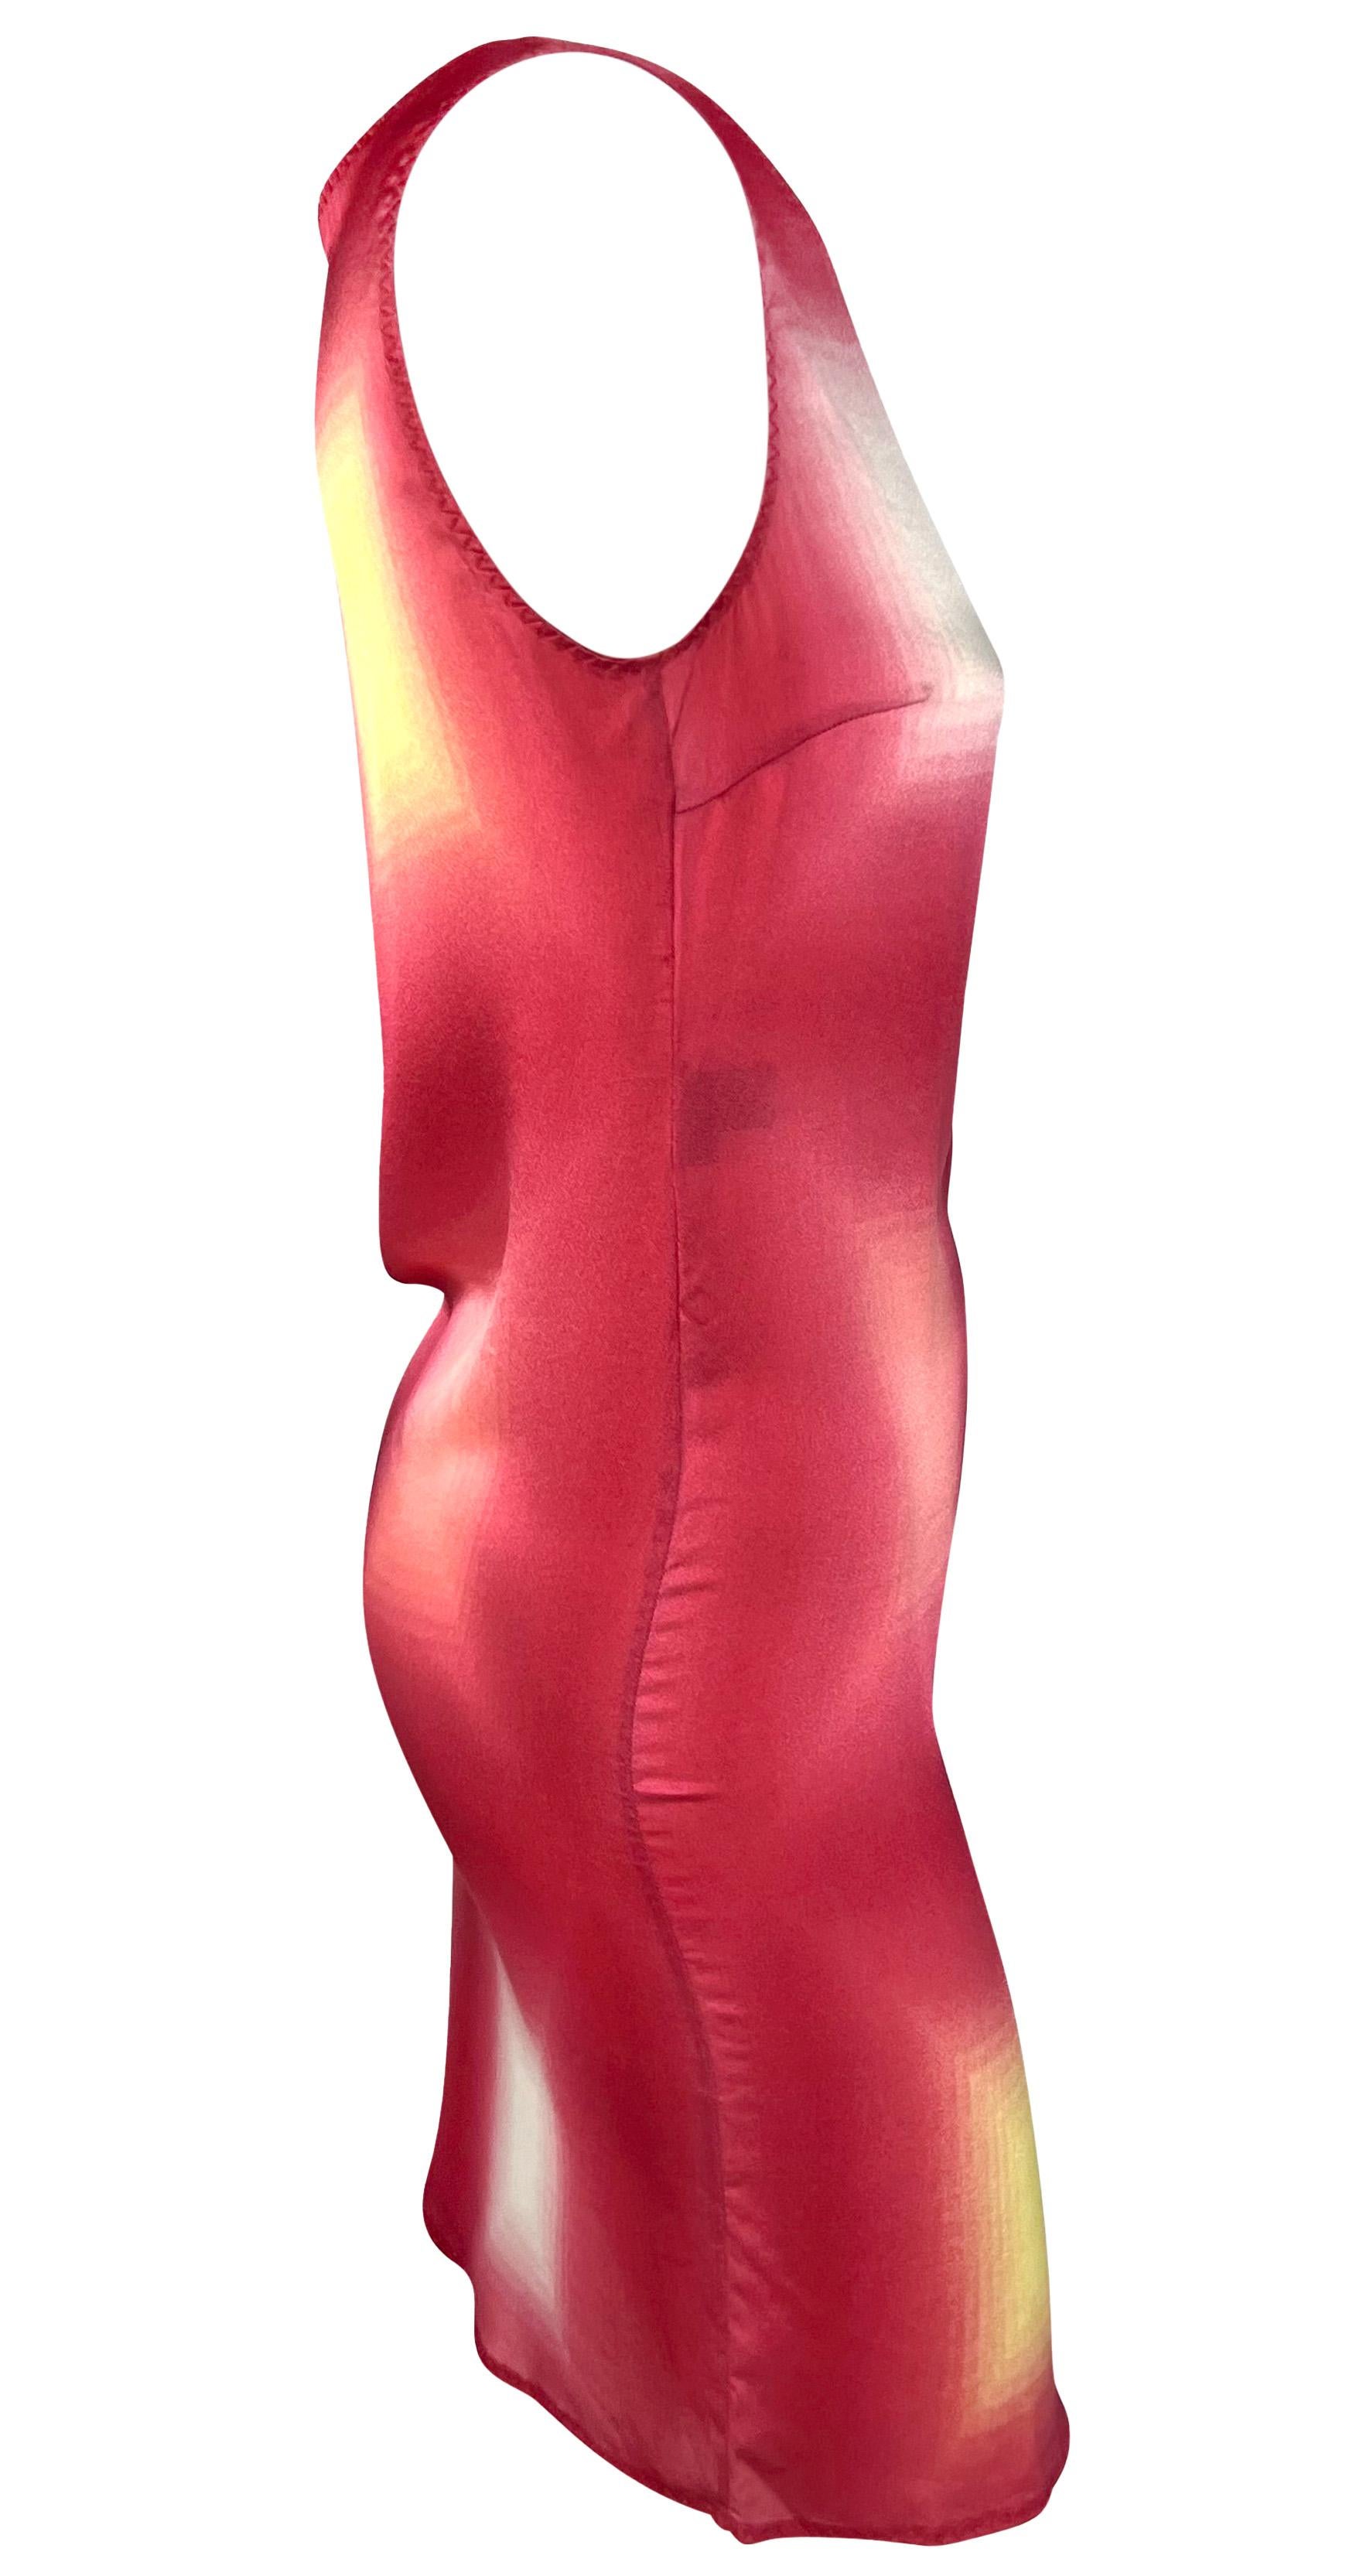 S/S 1998 Prada Red Geometric Ombré Sheer Sleeveless Dress For Sale 3